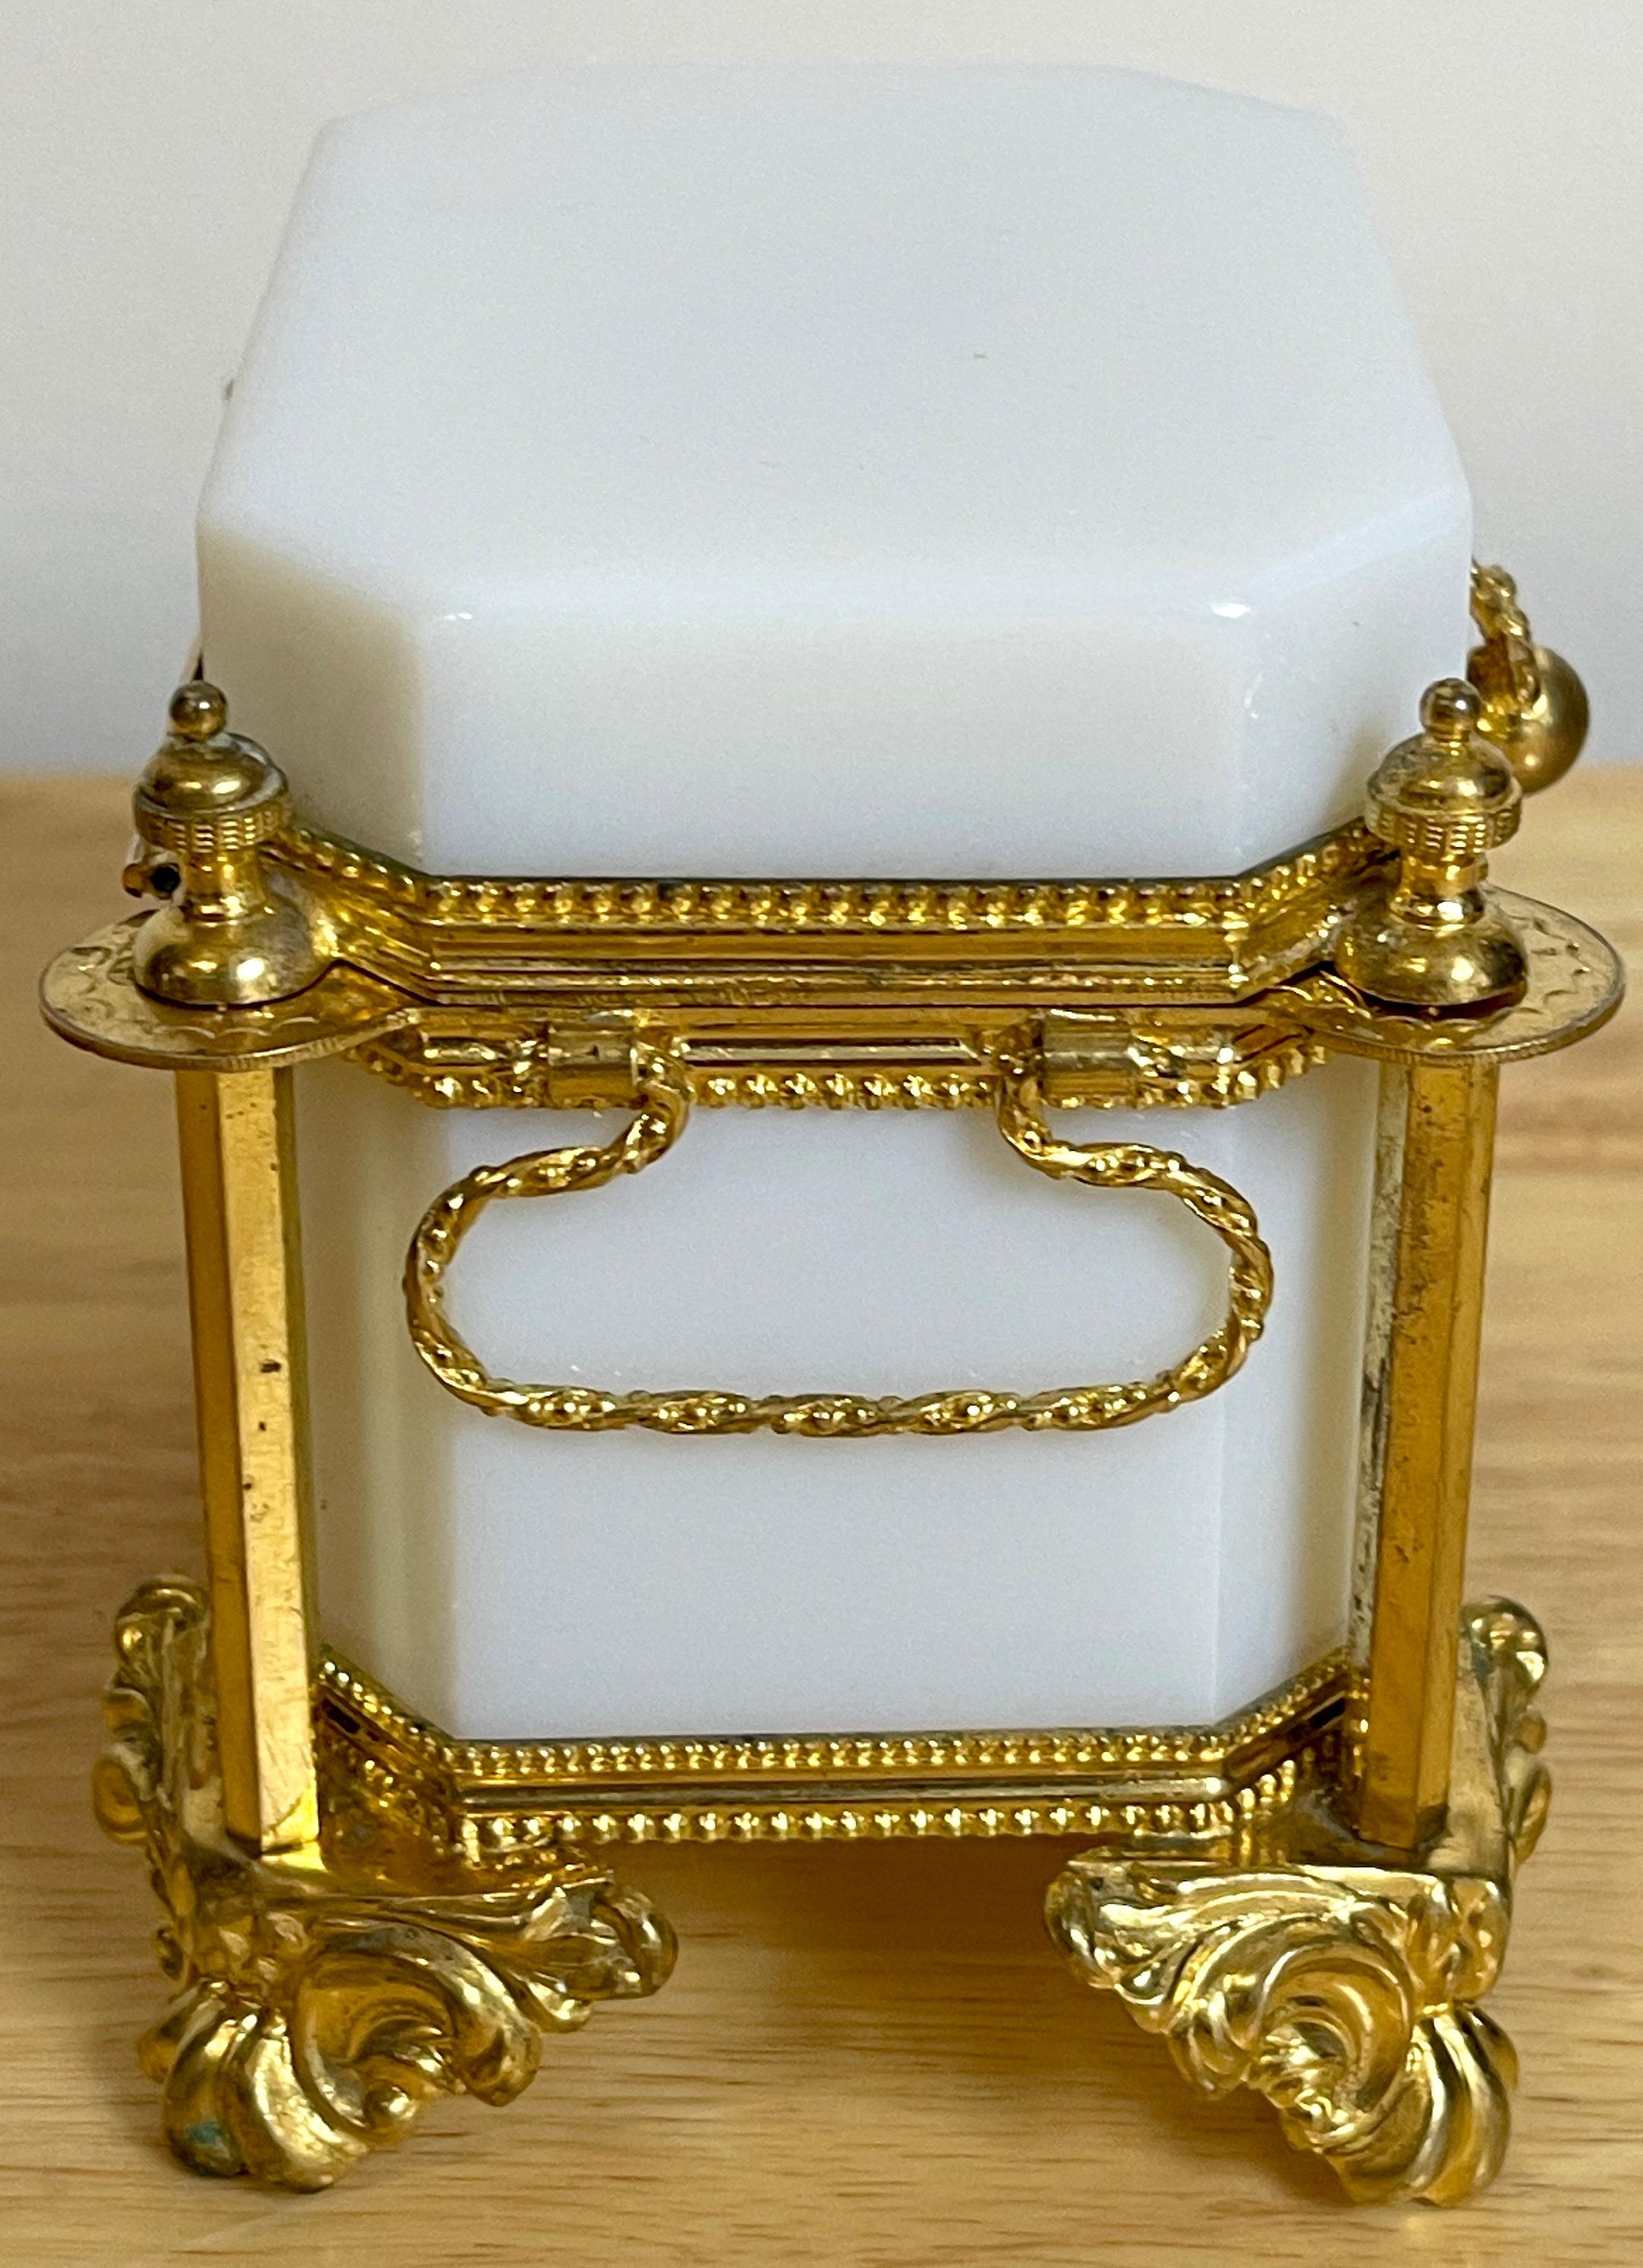 Opaline Glass Exquisite French Ormolu Mounted White Opaline Diminutive Box, C 1865